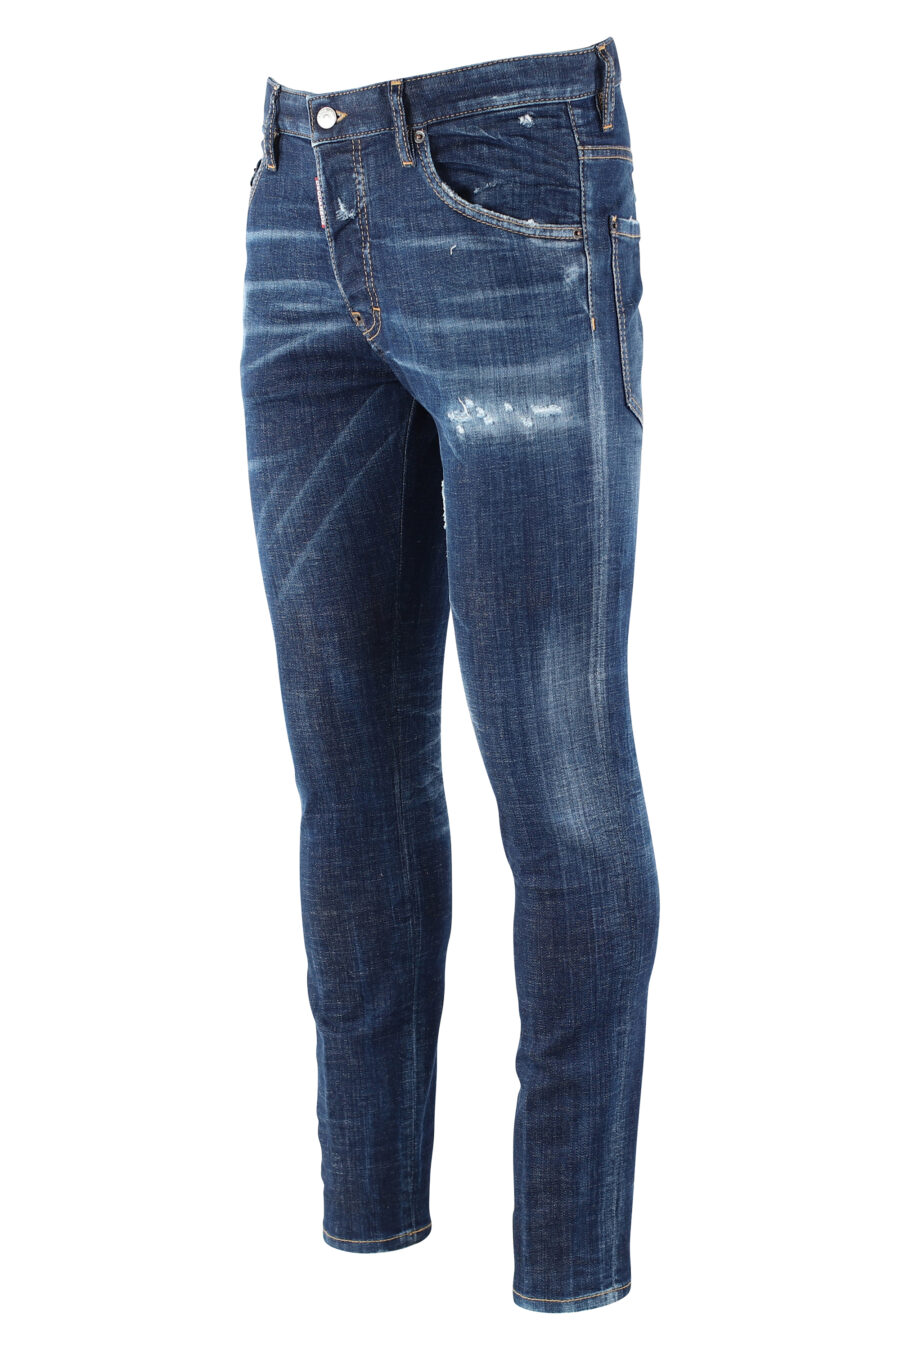 Jeanshose "icon skater jean" dunkelblau semi-getragen - IMG 9655